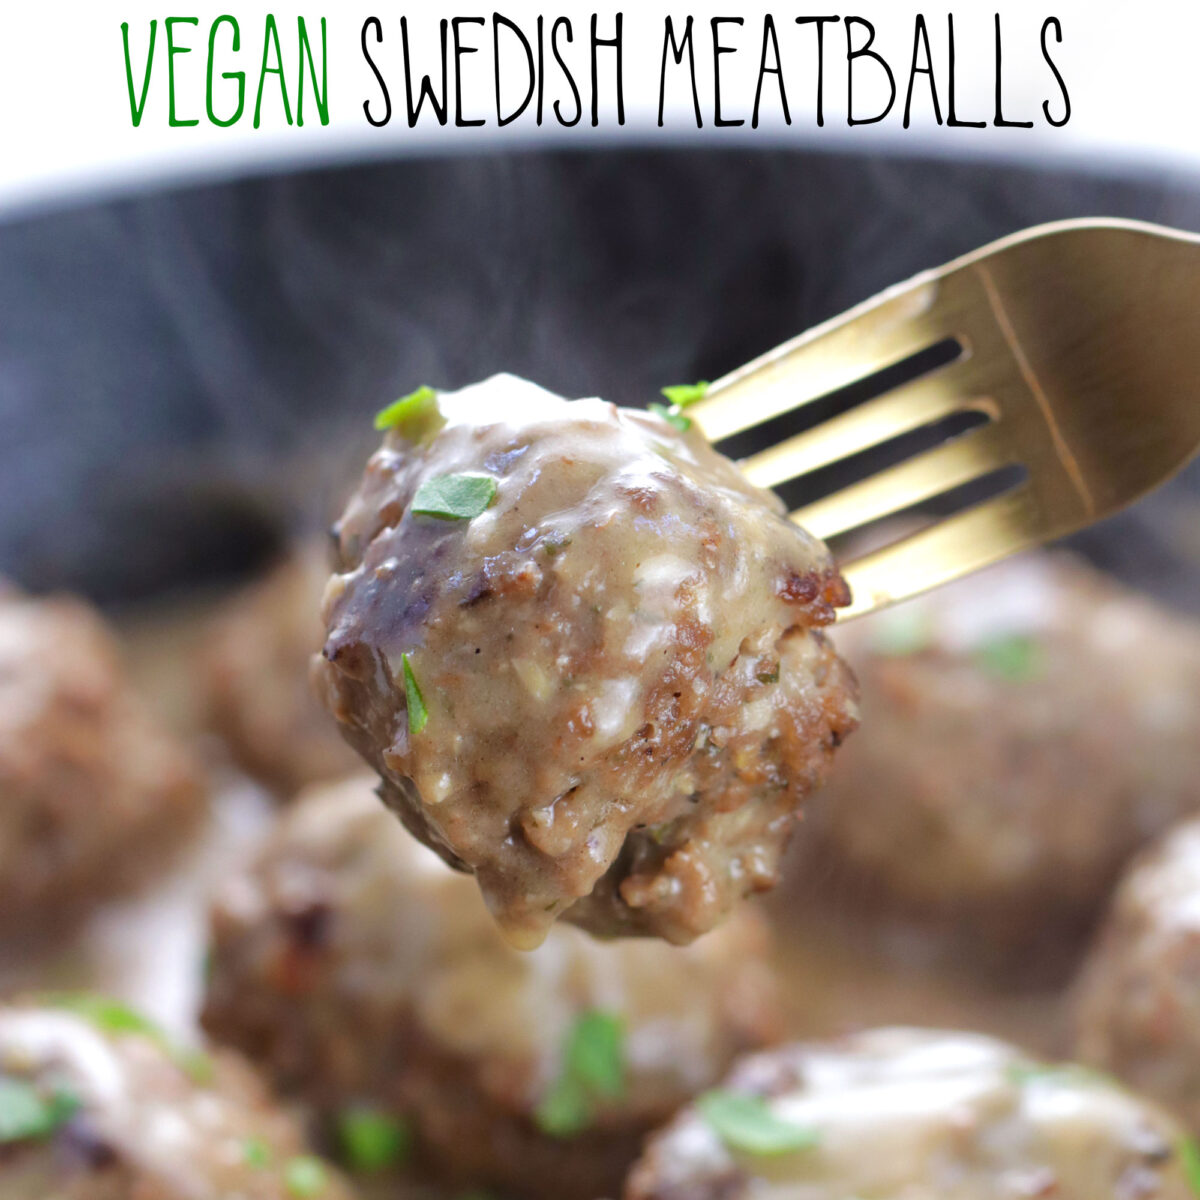 Vegan Swedish Meatballs